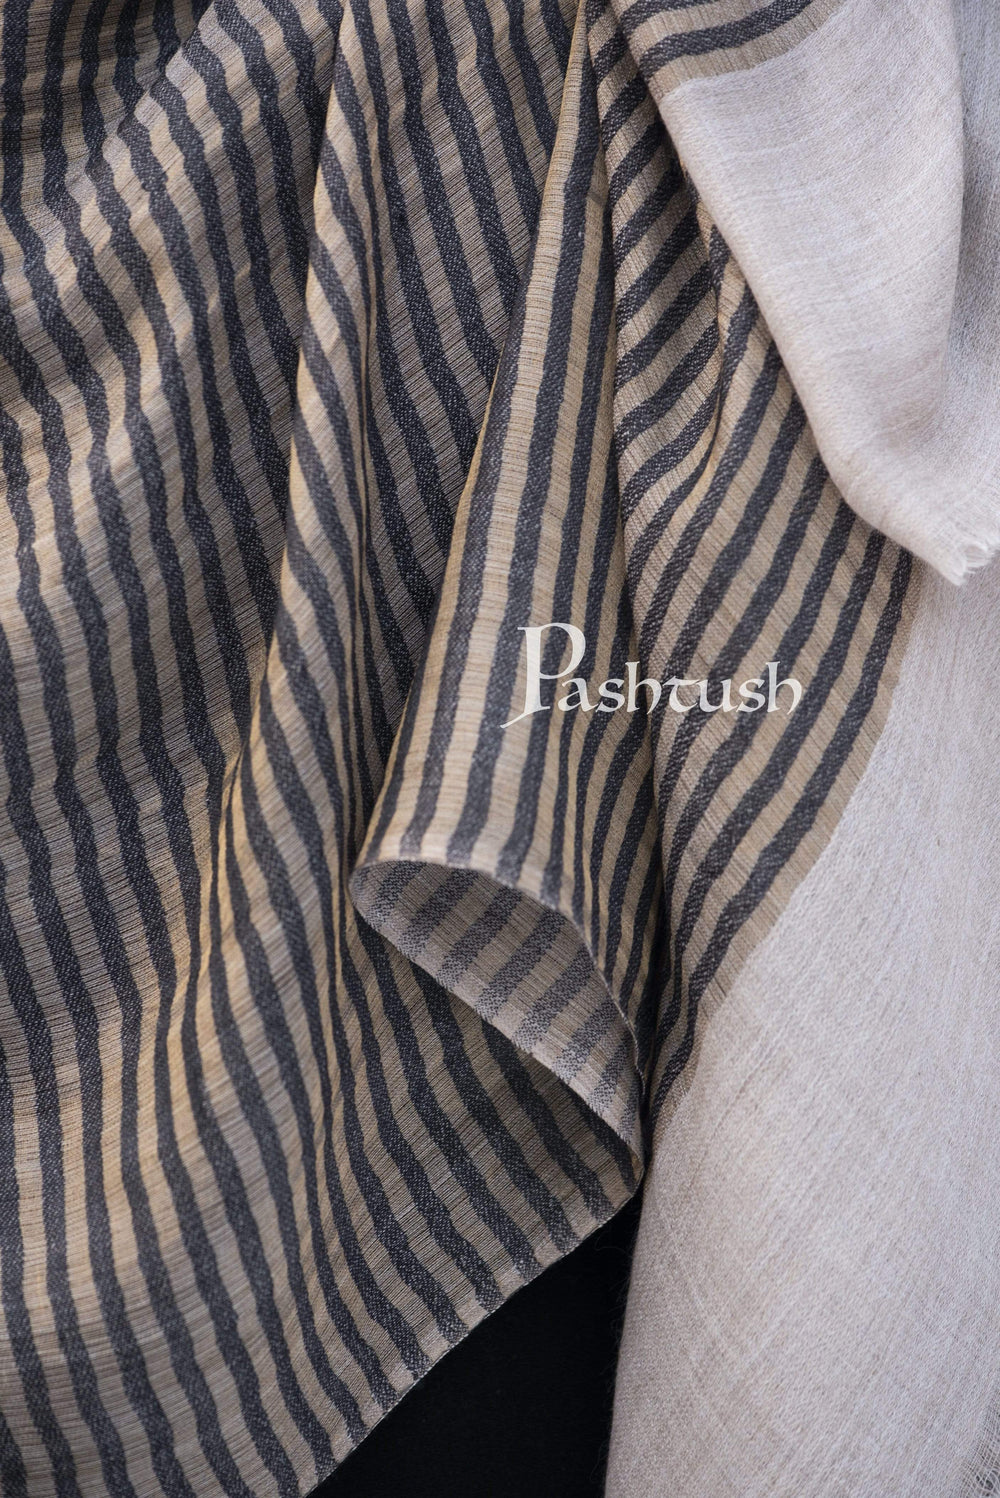 Pashtush India 70x200 Pashutsh Mens Twilight Striped Scarf, With Metallic Thread Weave